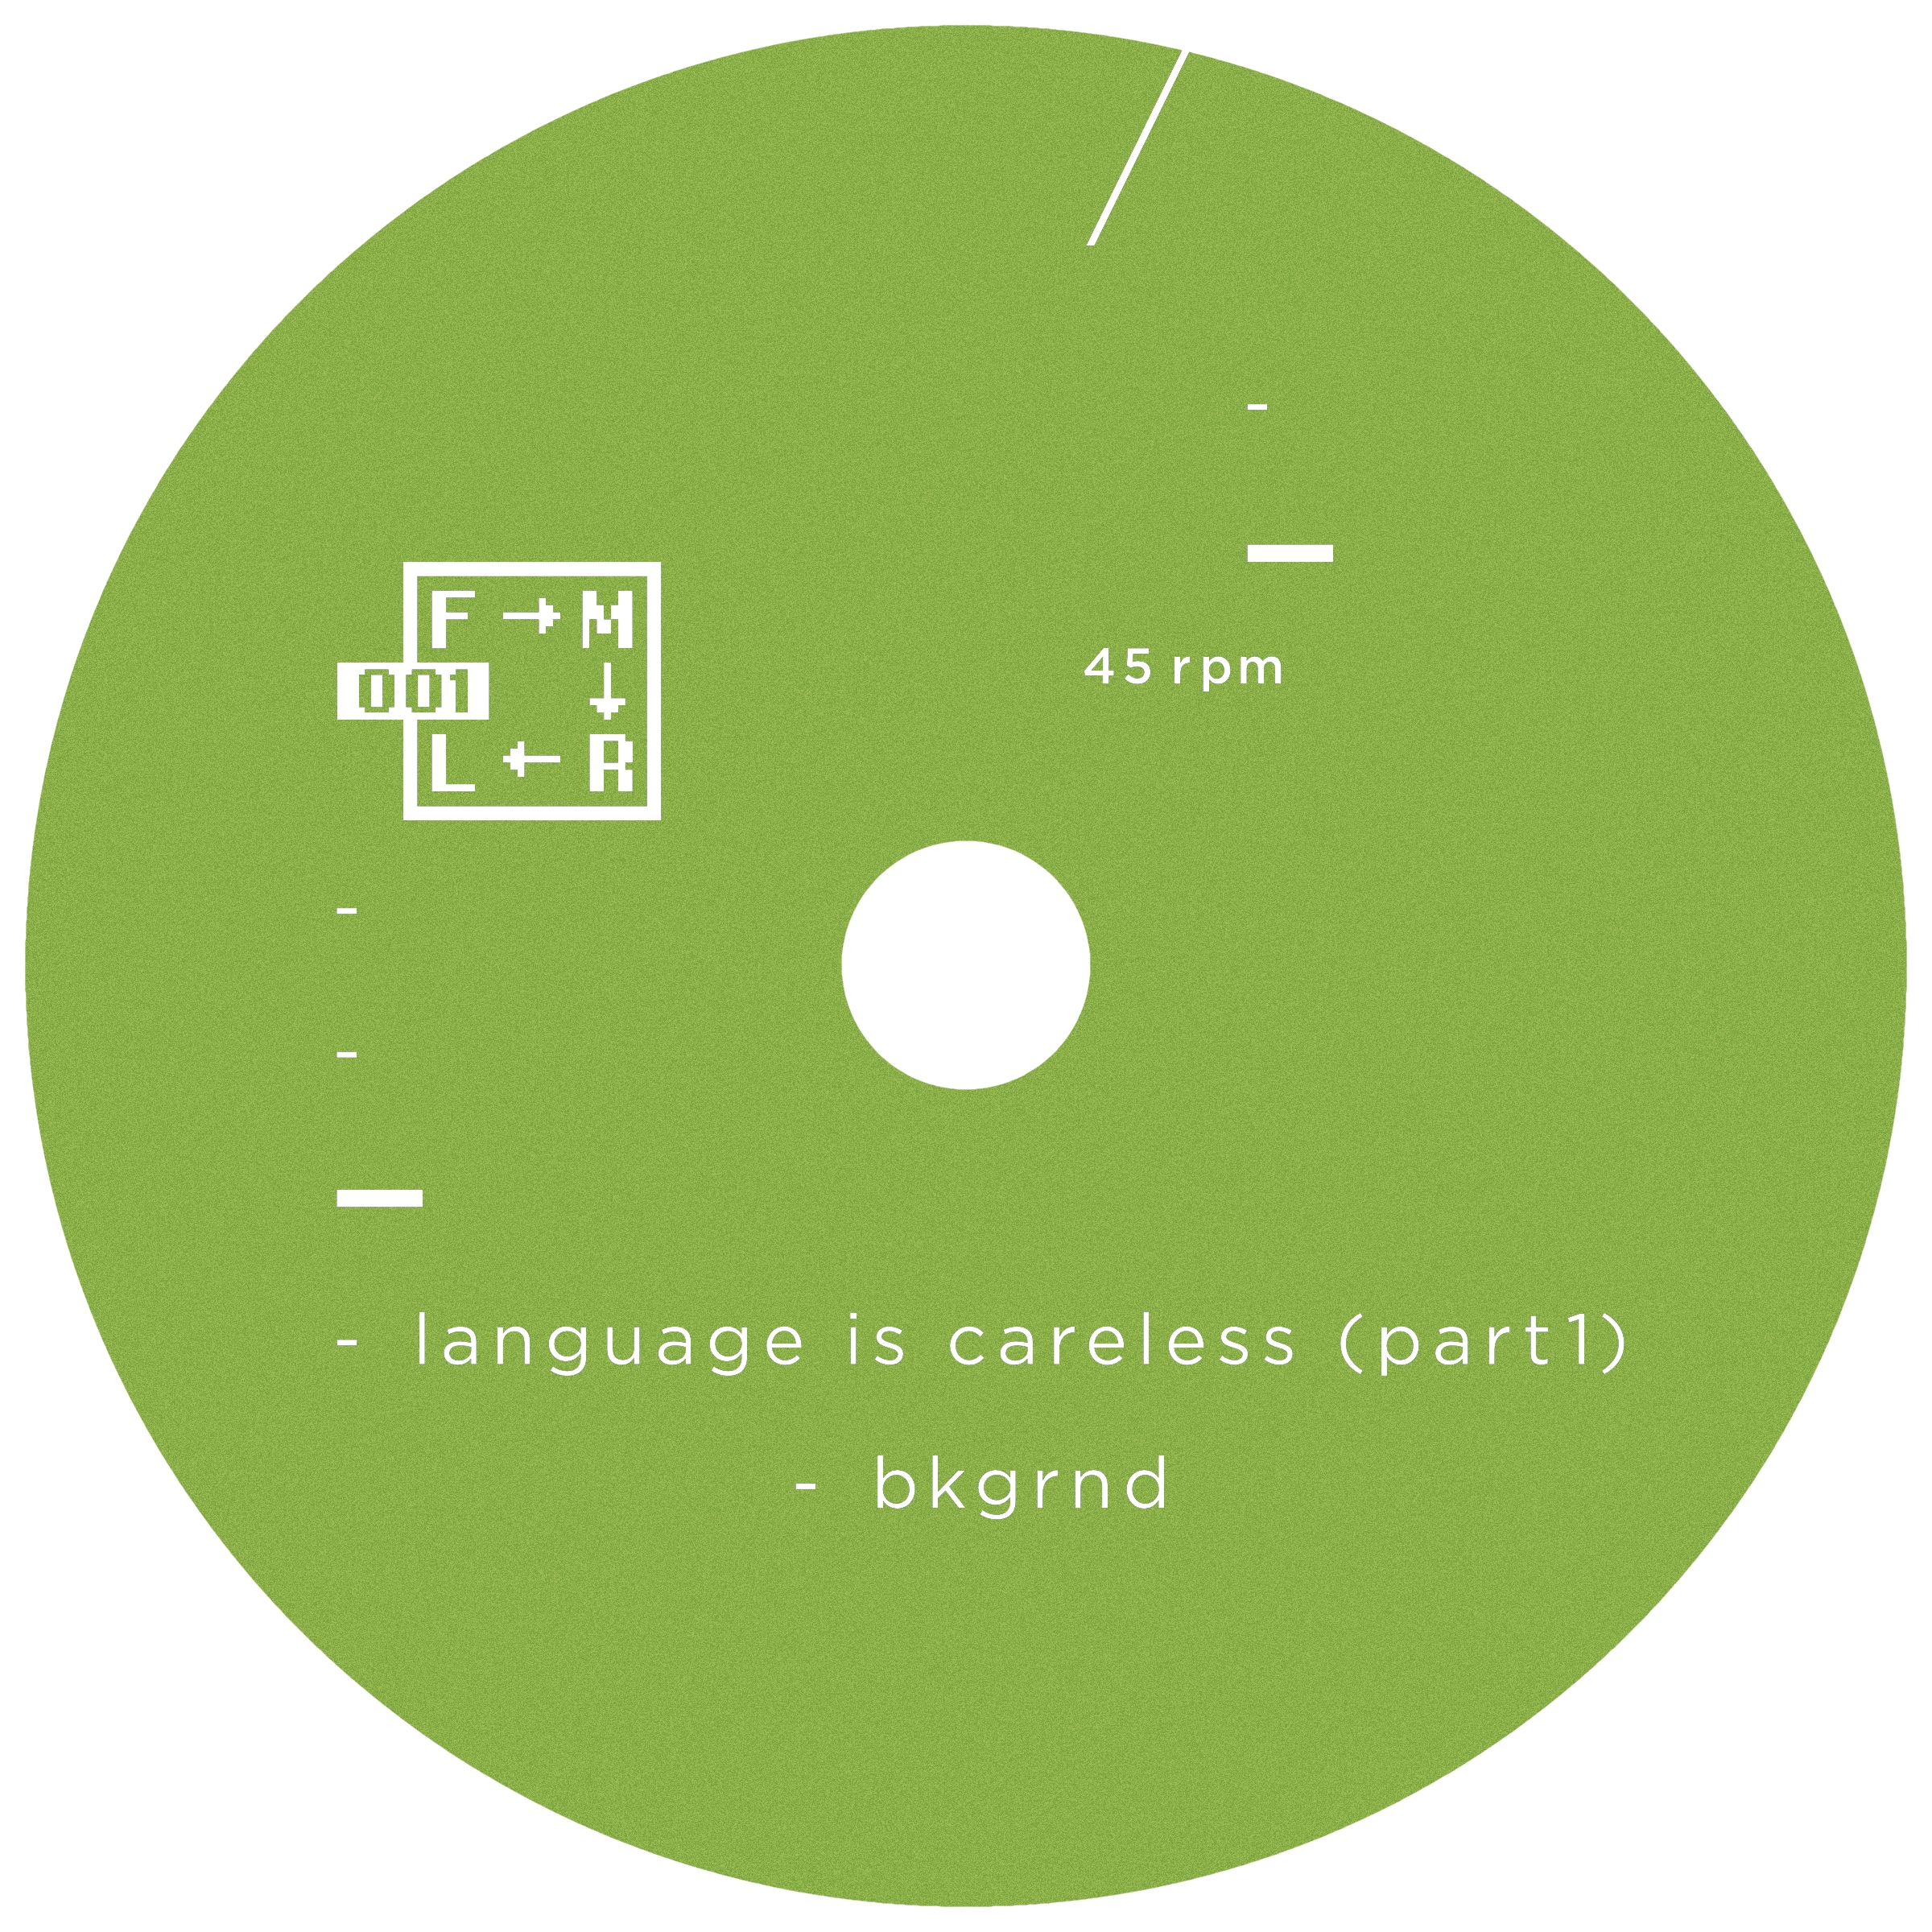 B1. language is careless (part 1) + B2. bkgrnd